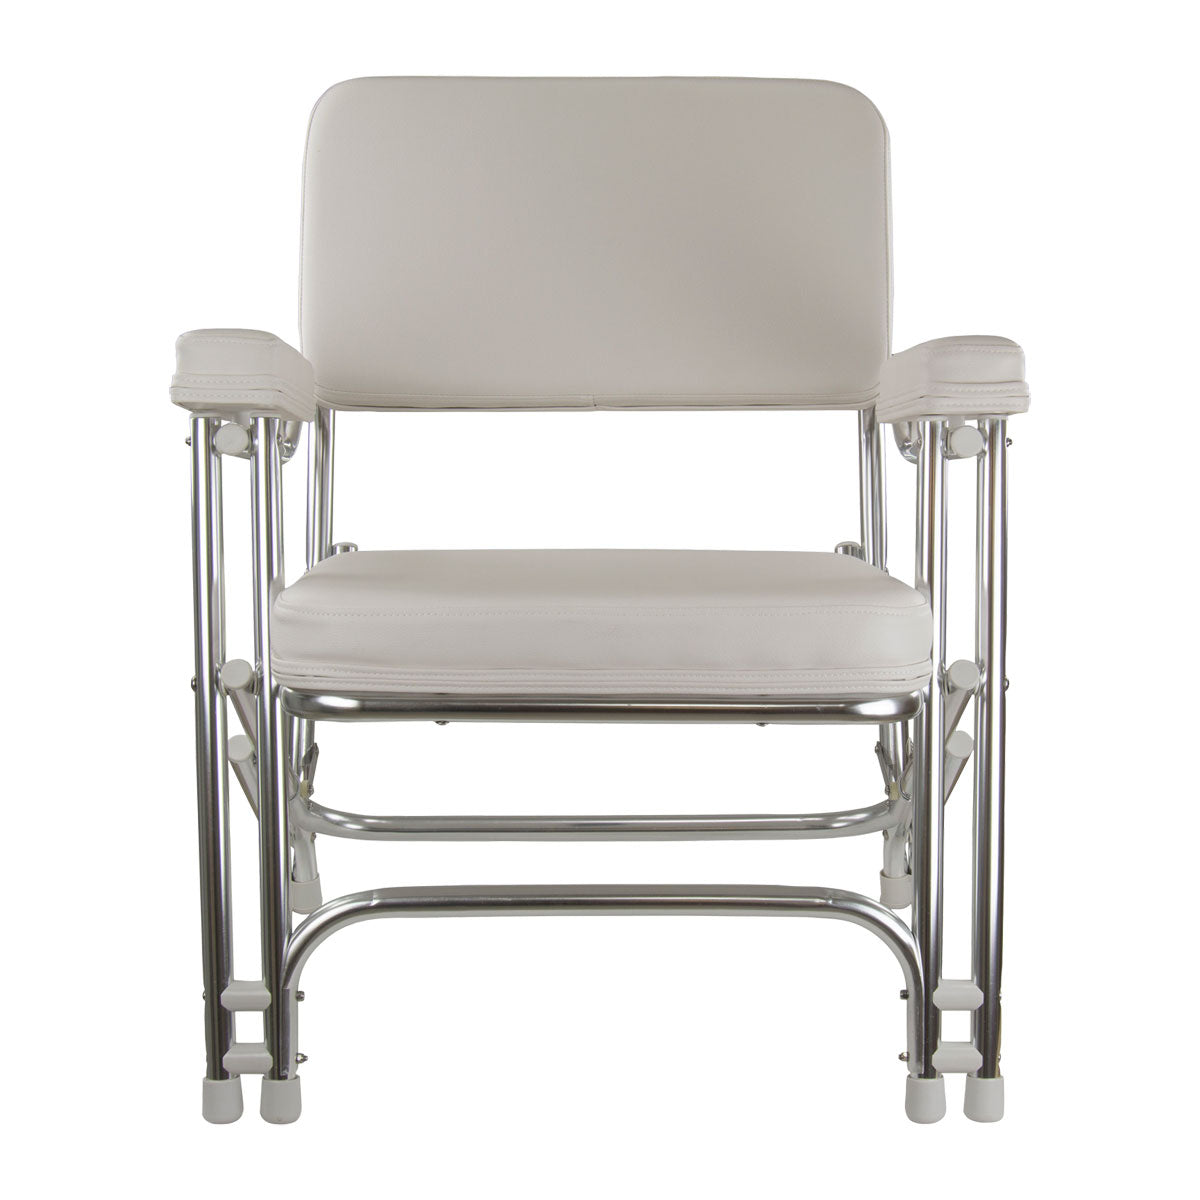 Deck Chair Folding alloy frame @ $499.95